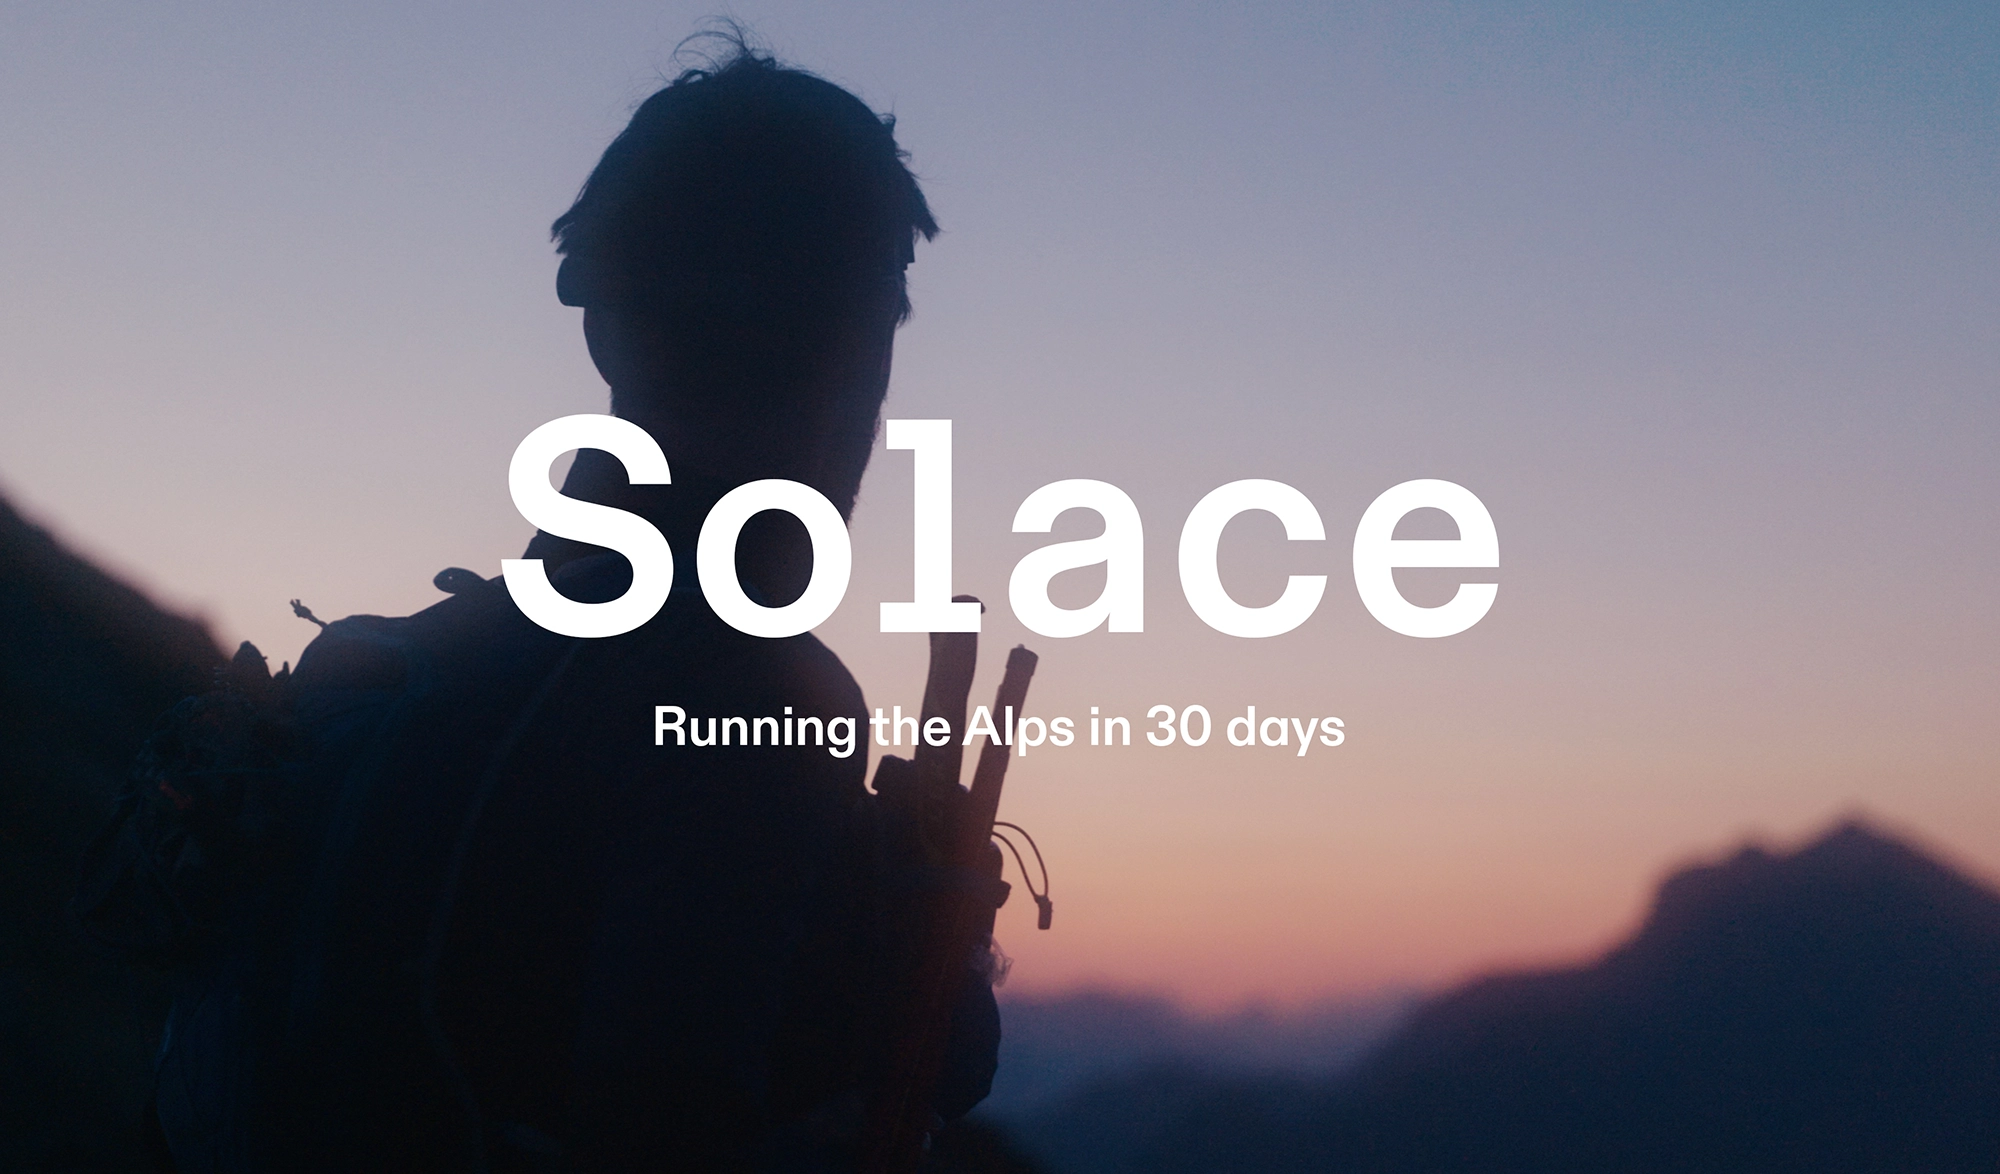 Film Solace running the alps Karel Sabbe On running